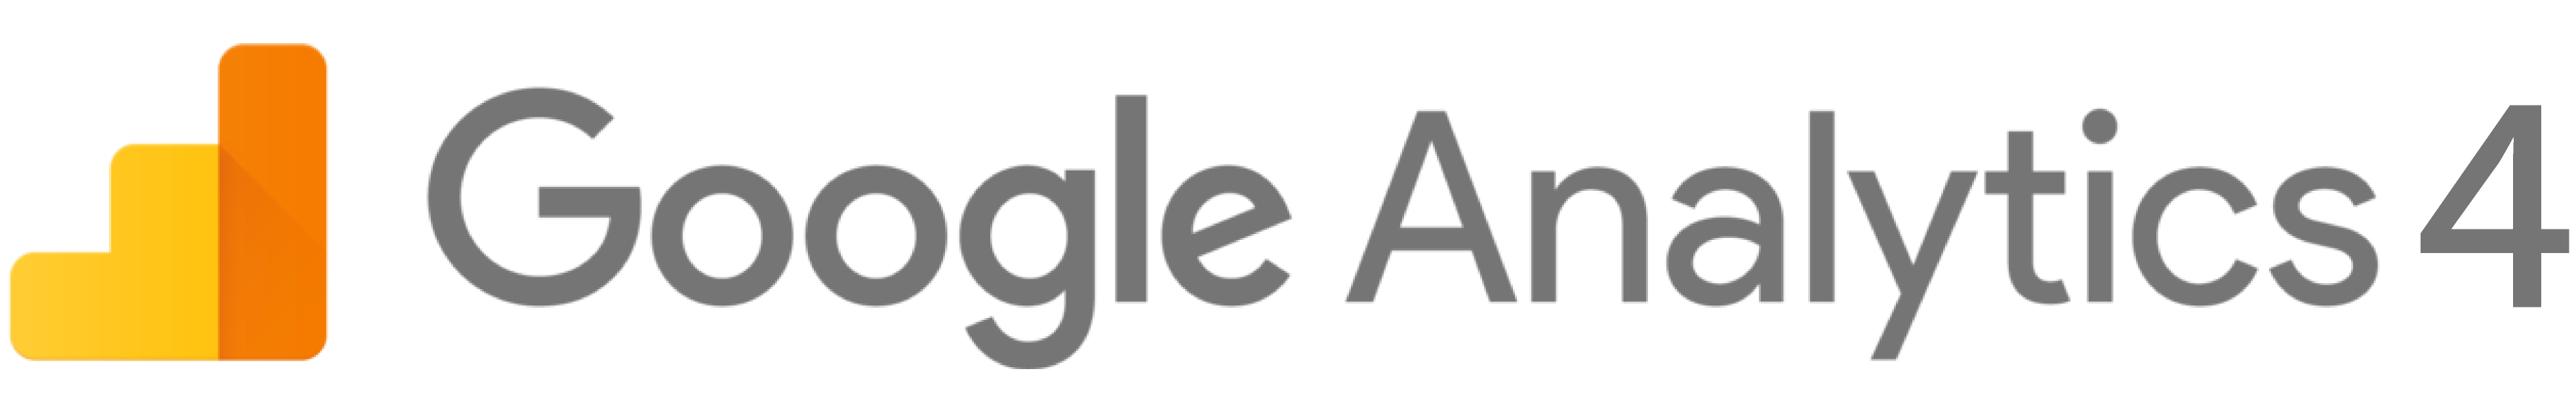 Google Analytics 4 SEO Report Template